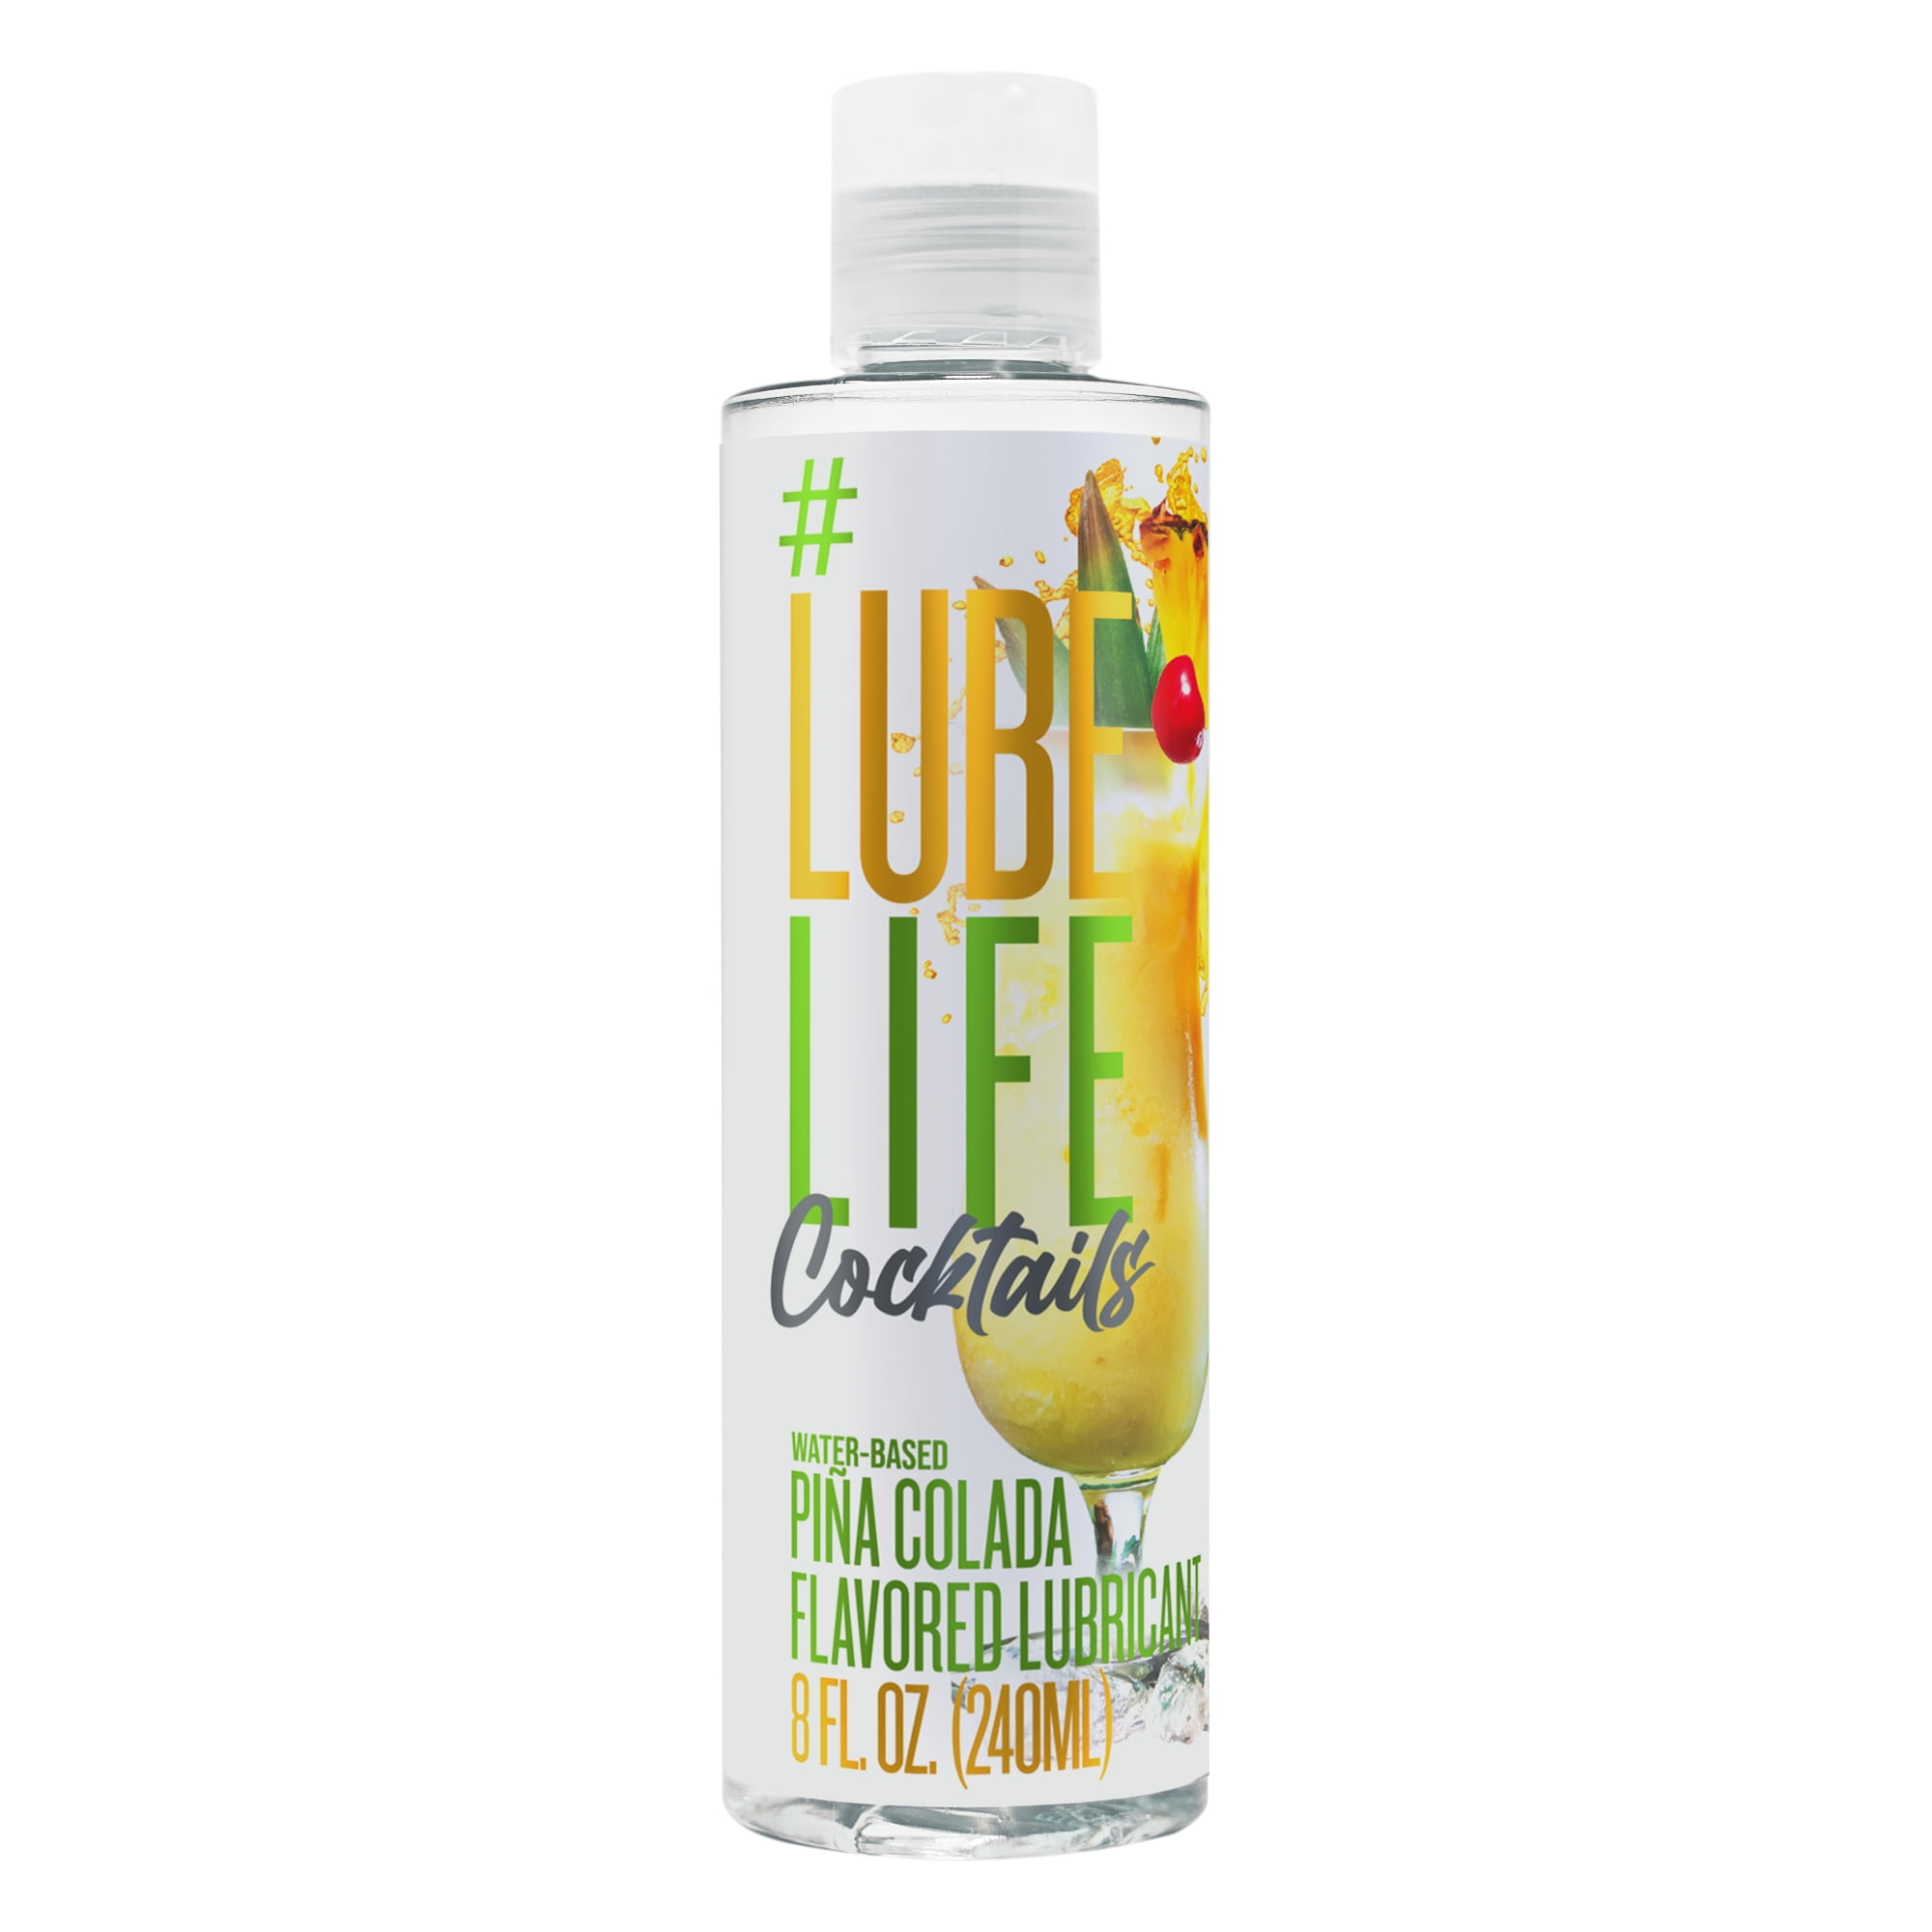 Lube Life Water-Based Piña Colada Flavored Lubricant, 8 fl oz